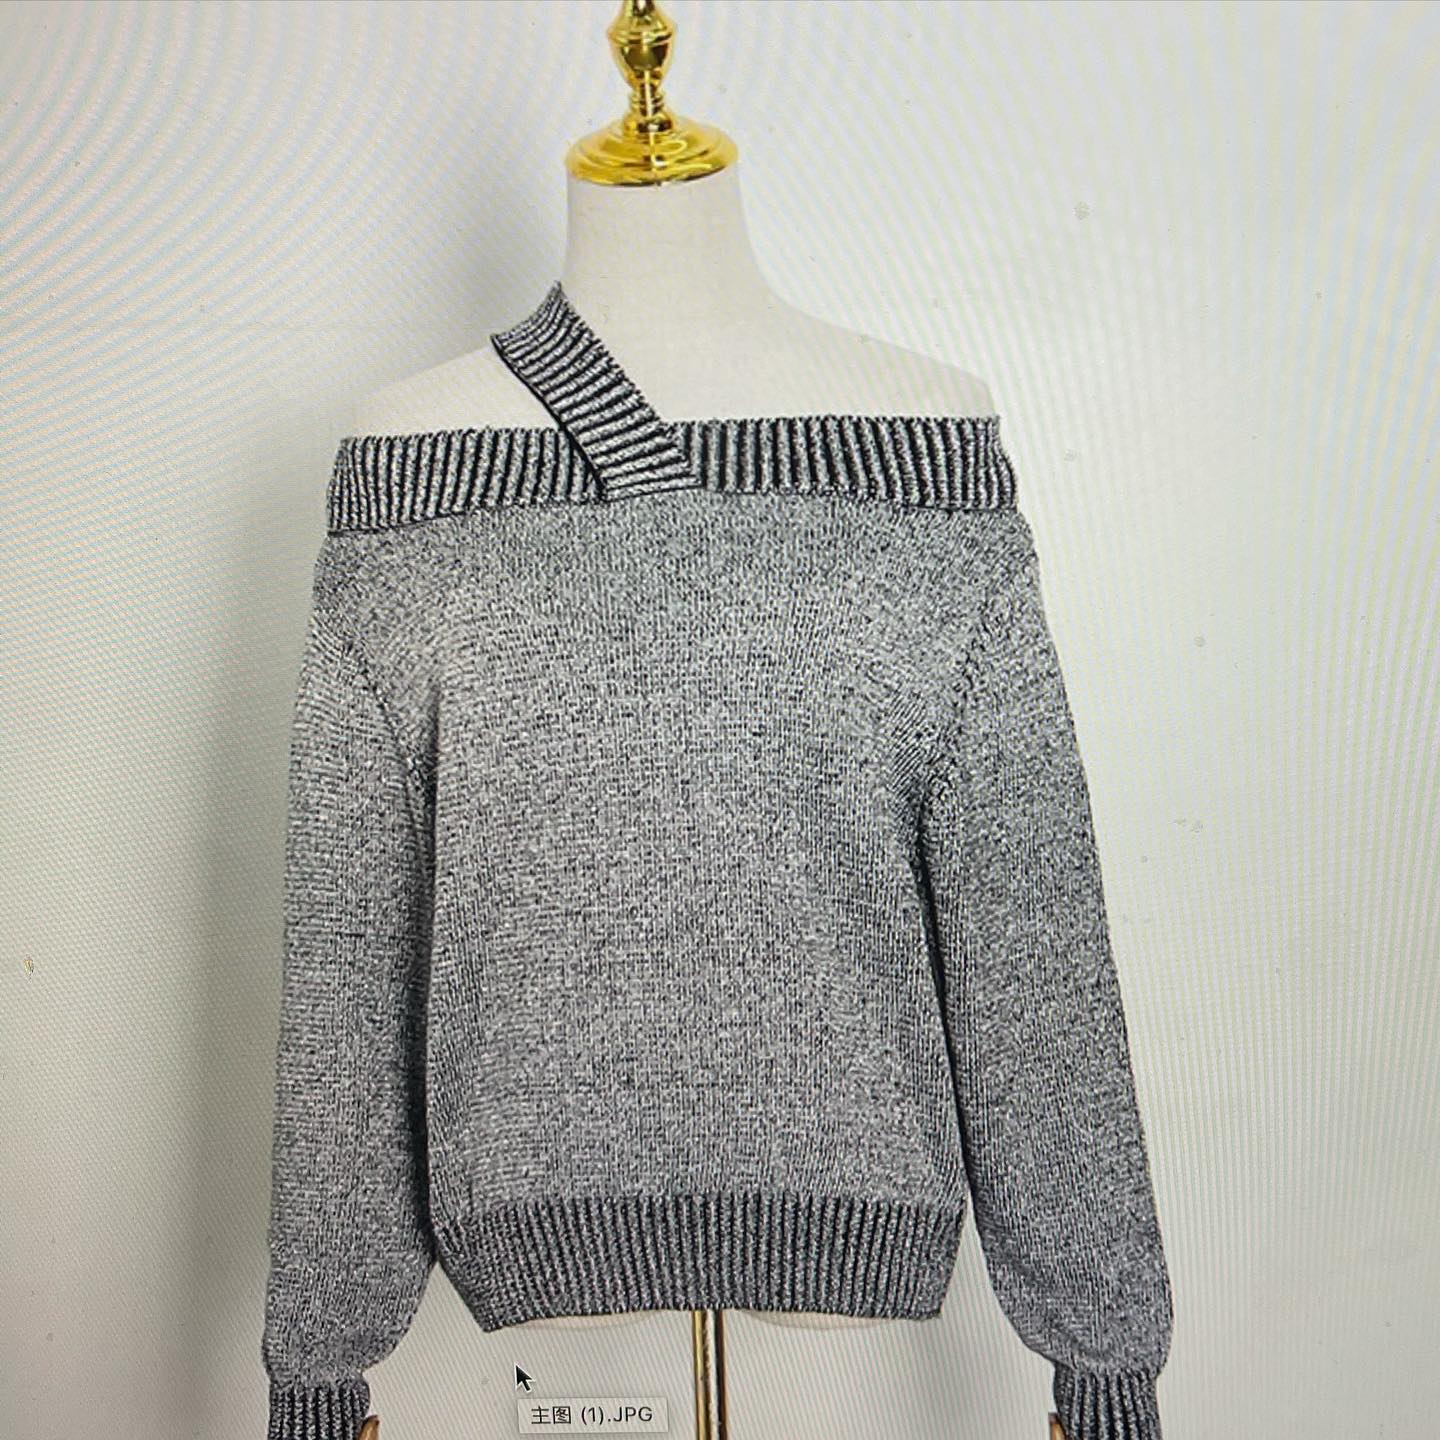 A grey sweater.